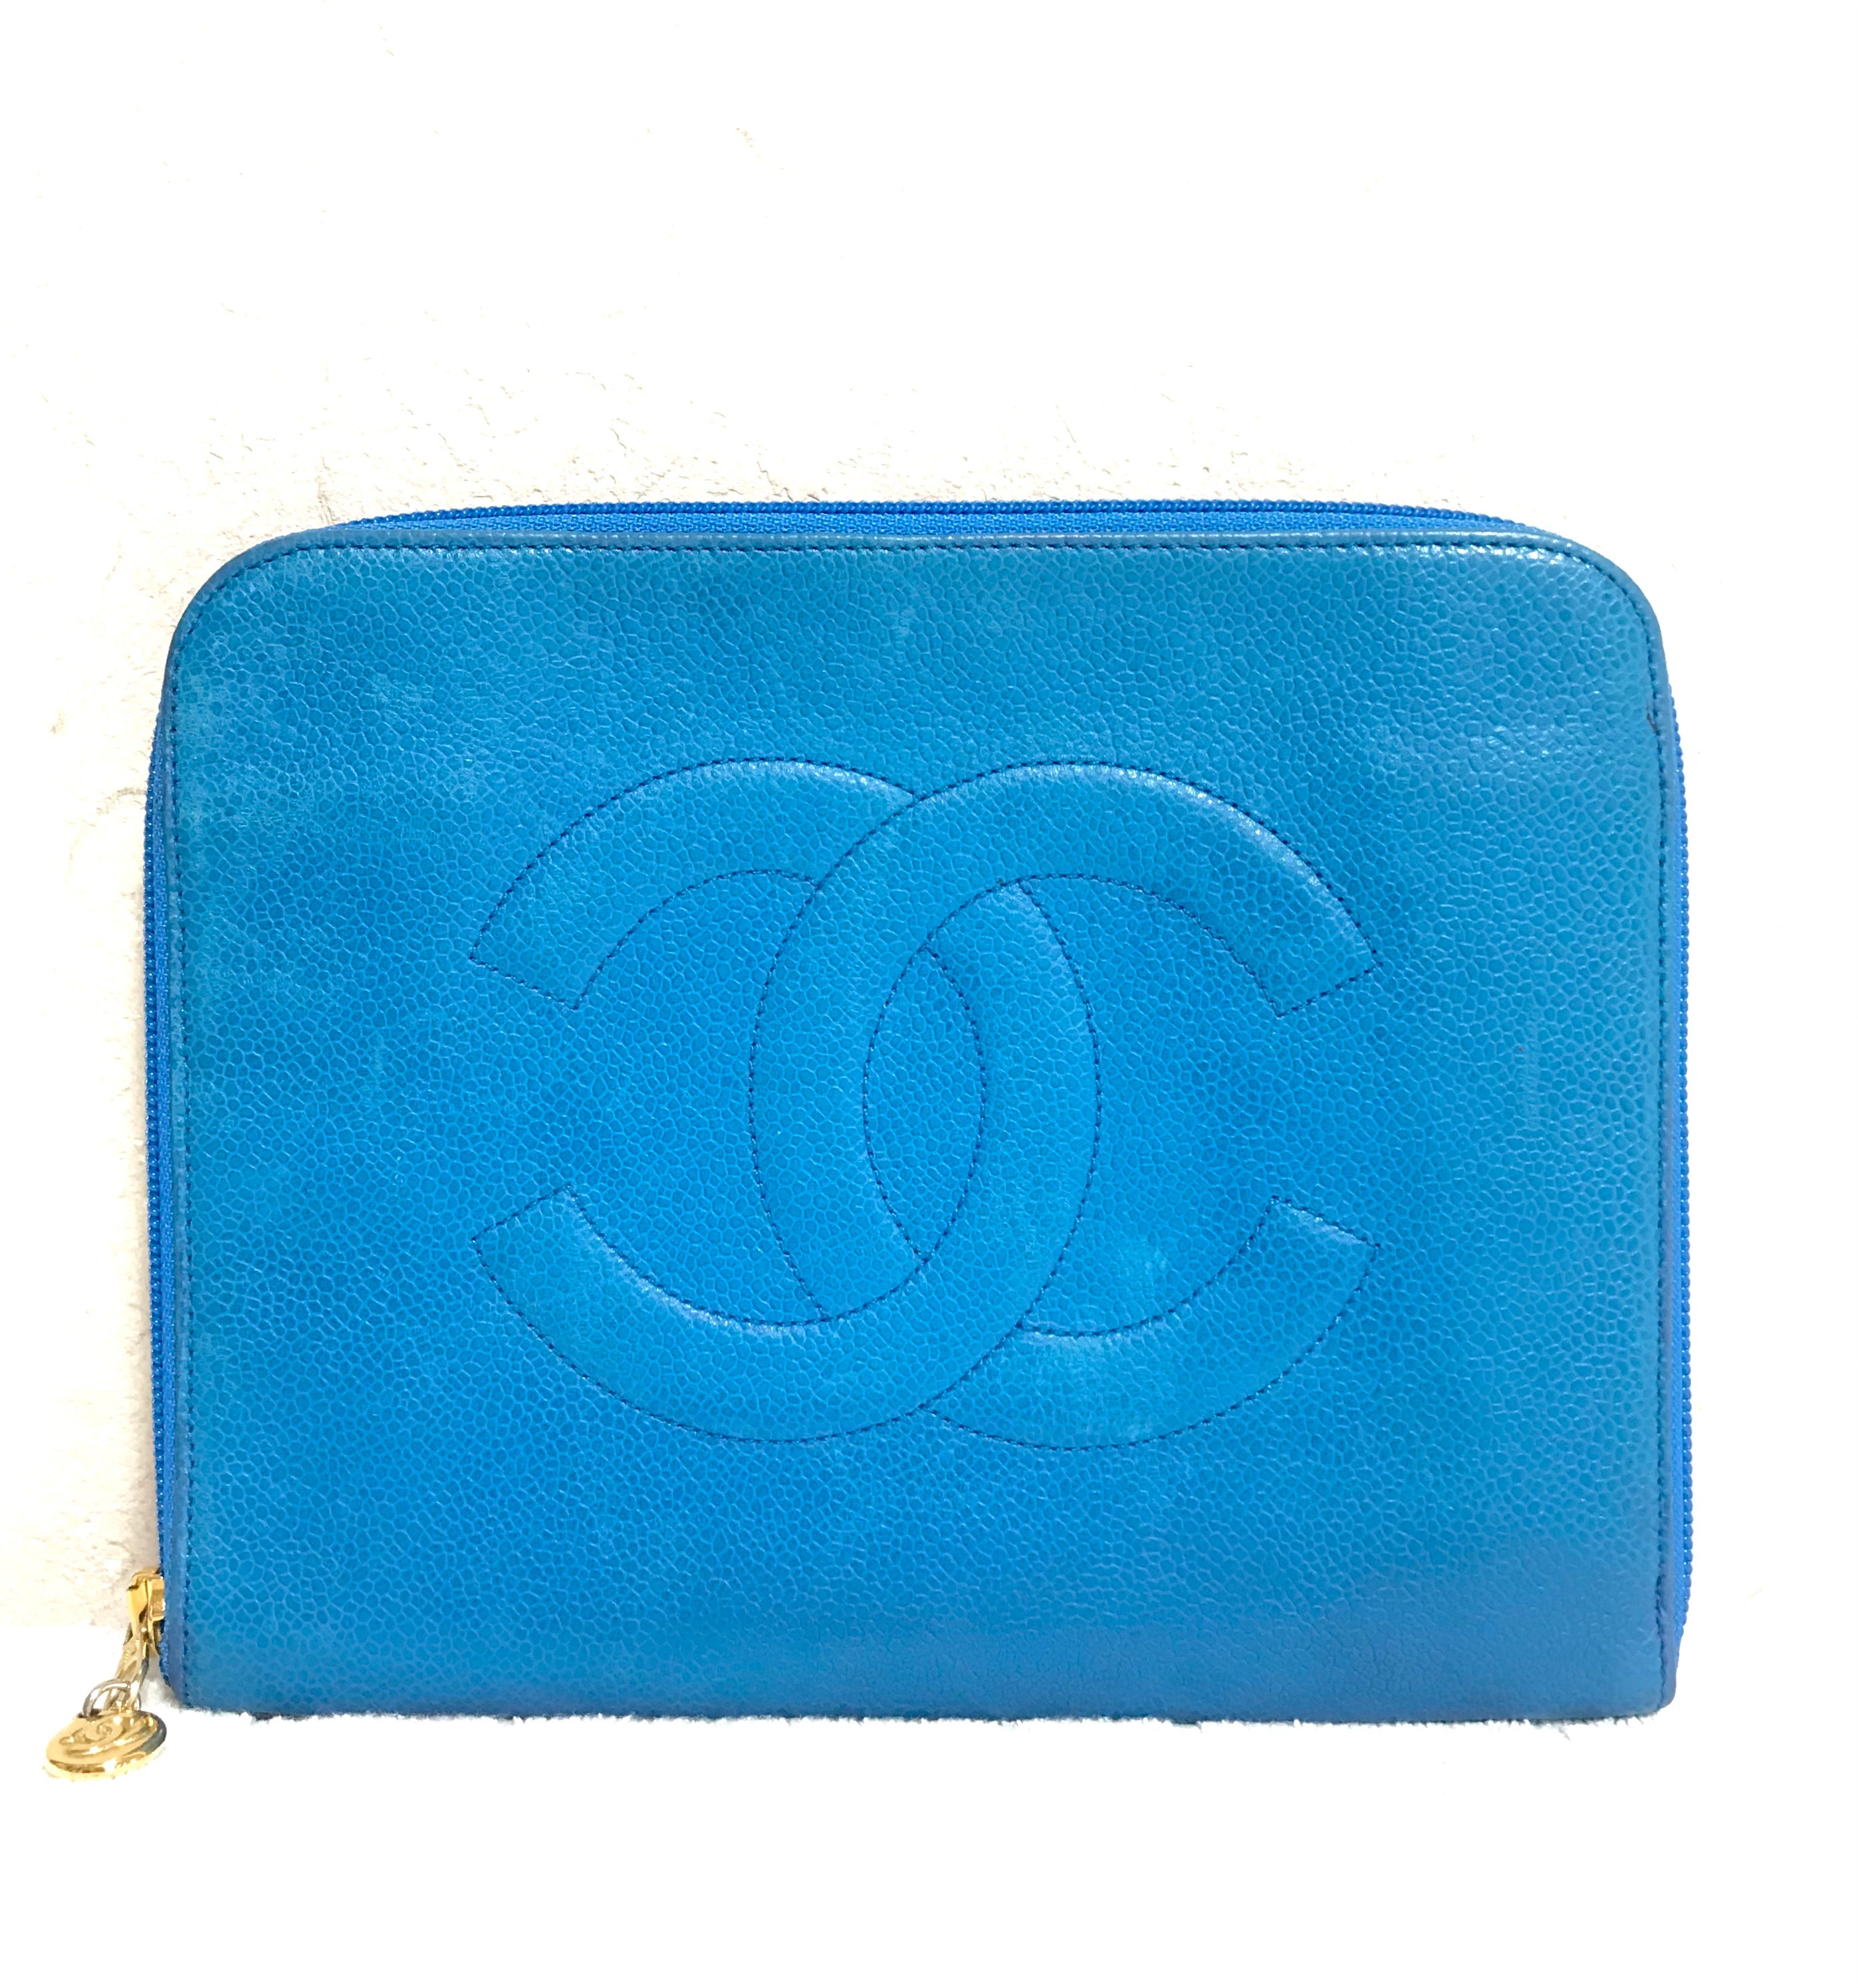 Vintage CHANEL blue caviar clutch bag, iPhone case, large wallet